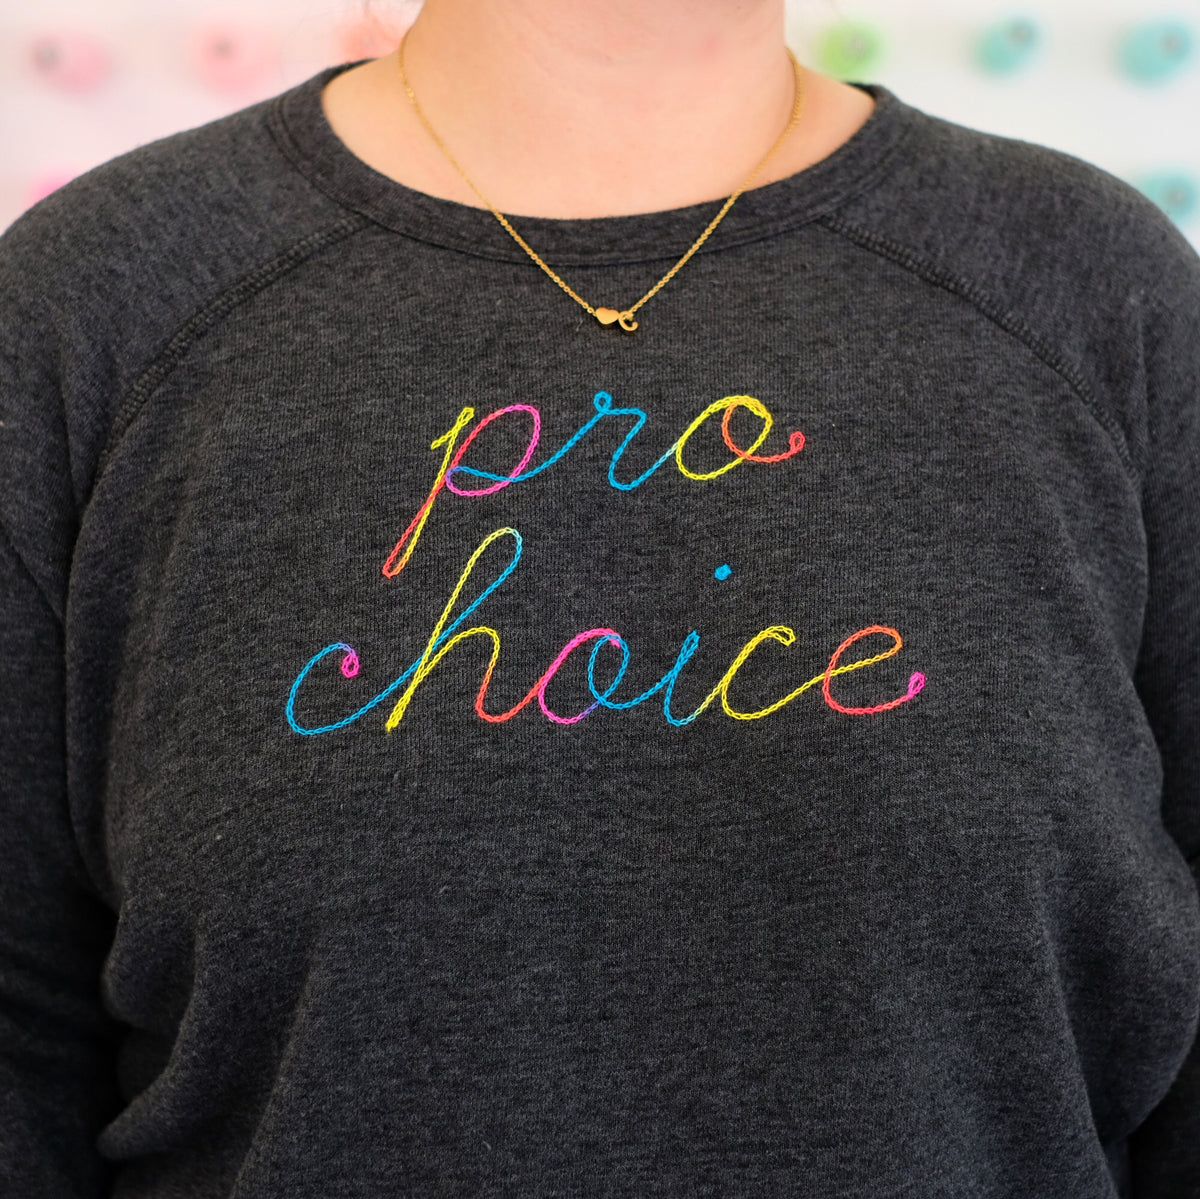 Pro Choice Embroidered Crew Neck Sweatshirt